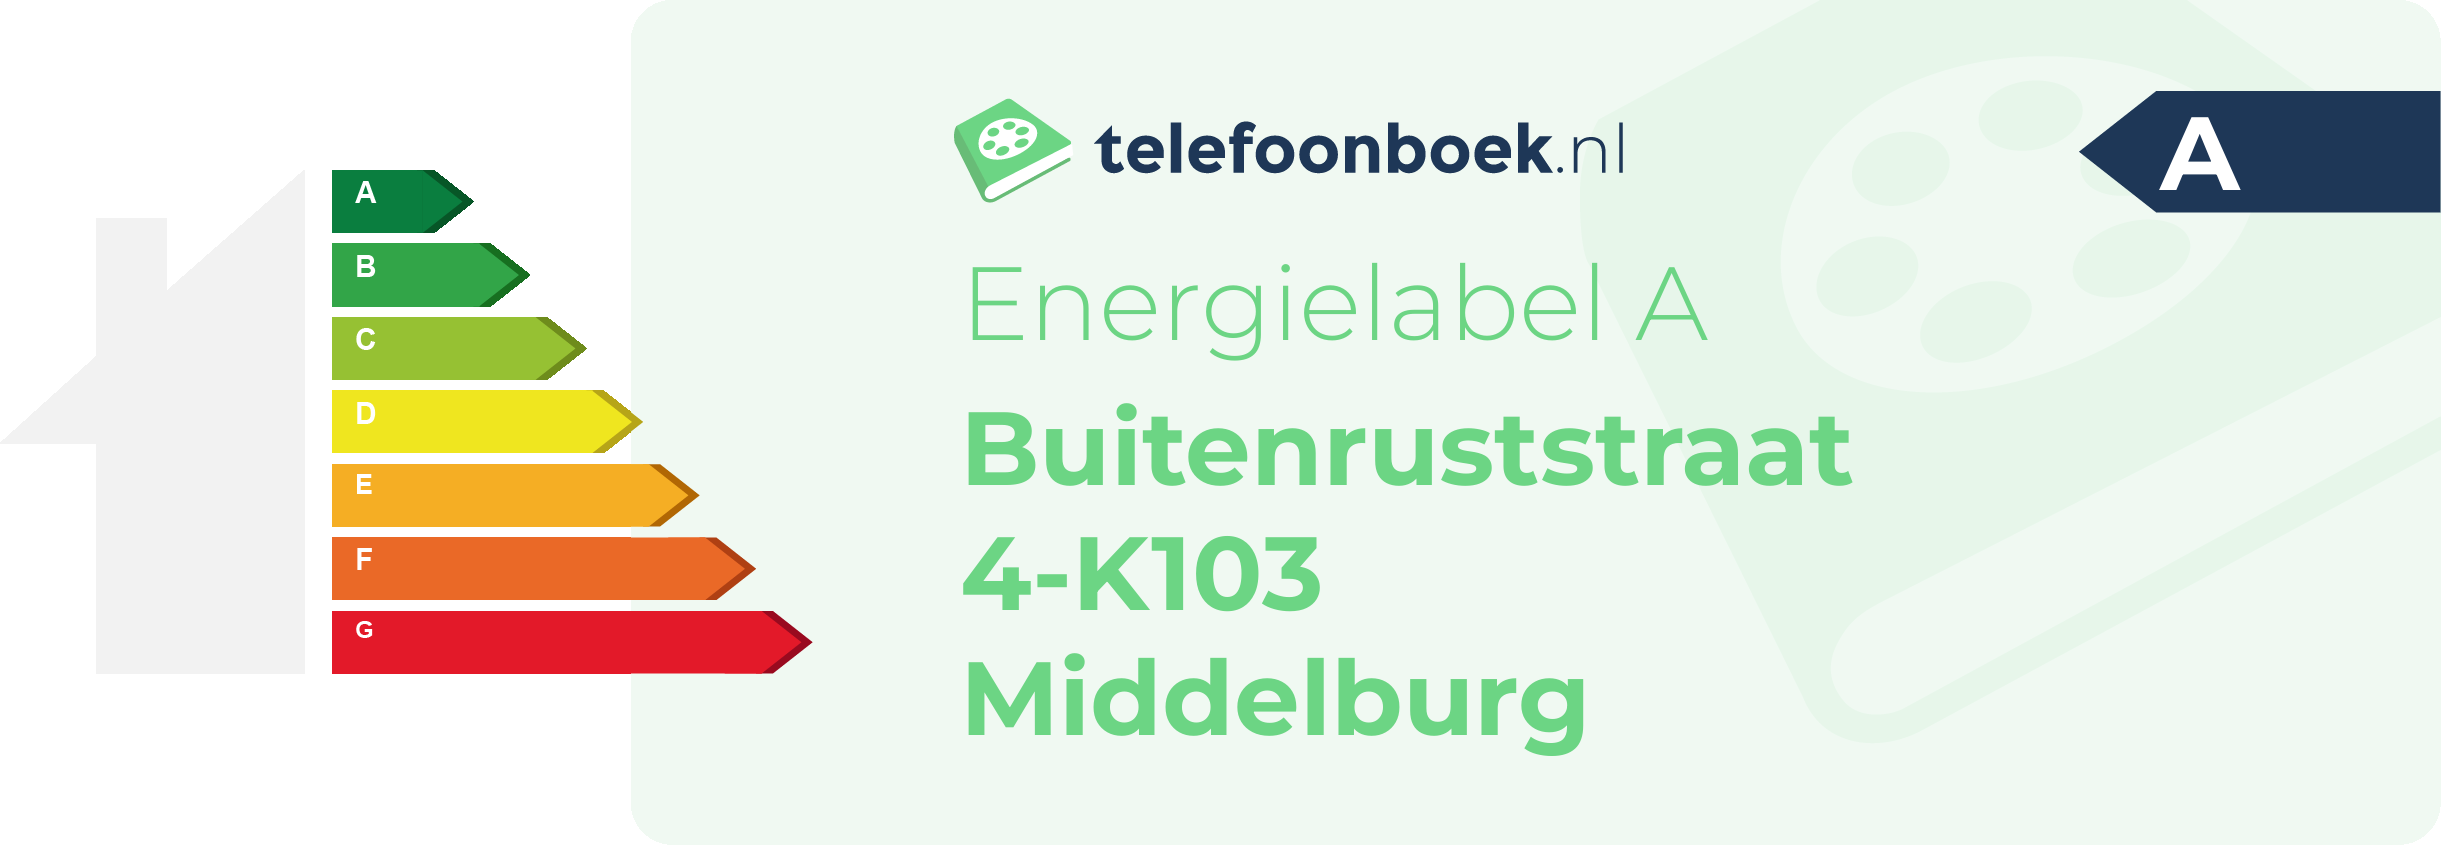 Energielabel Buitenruststraat 4-K103 Middelburg